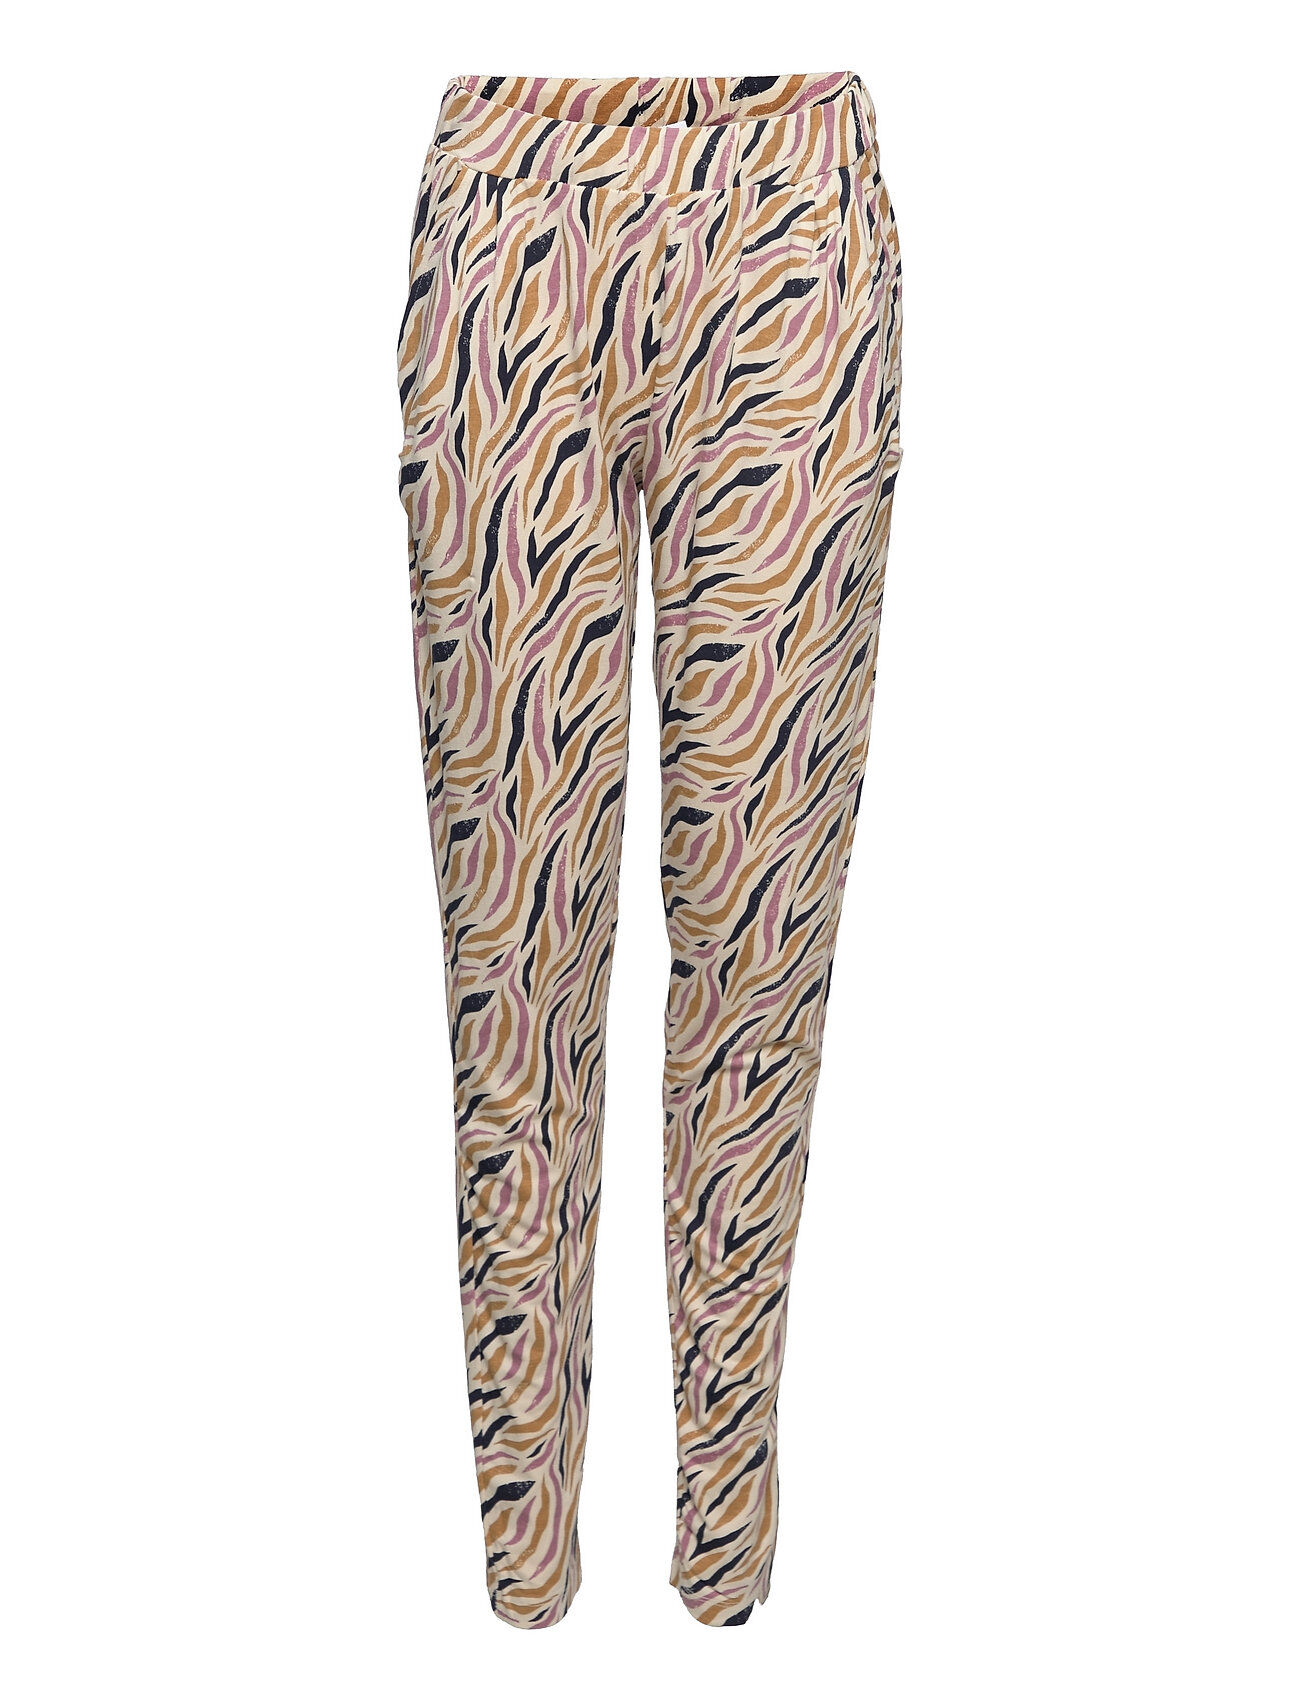 The New Tnbeate Pants Bukser Multi/mønstret The New